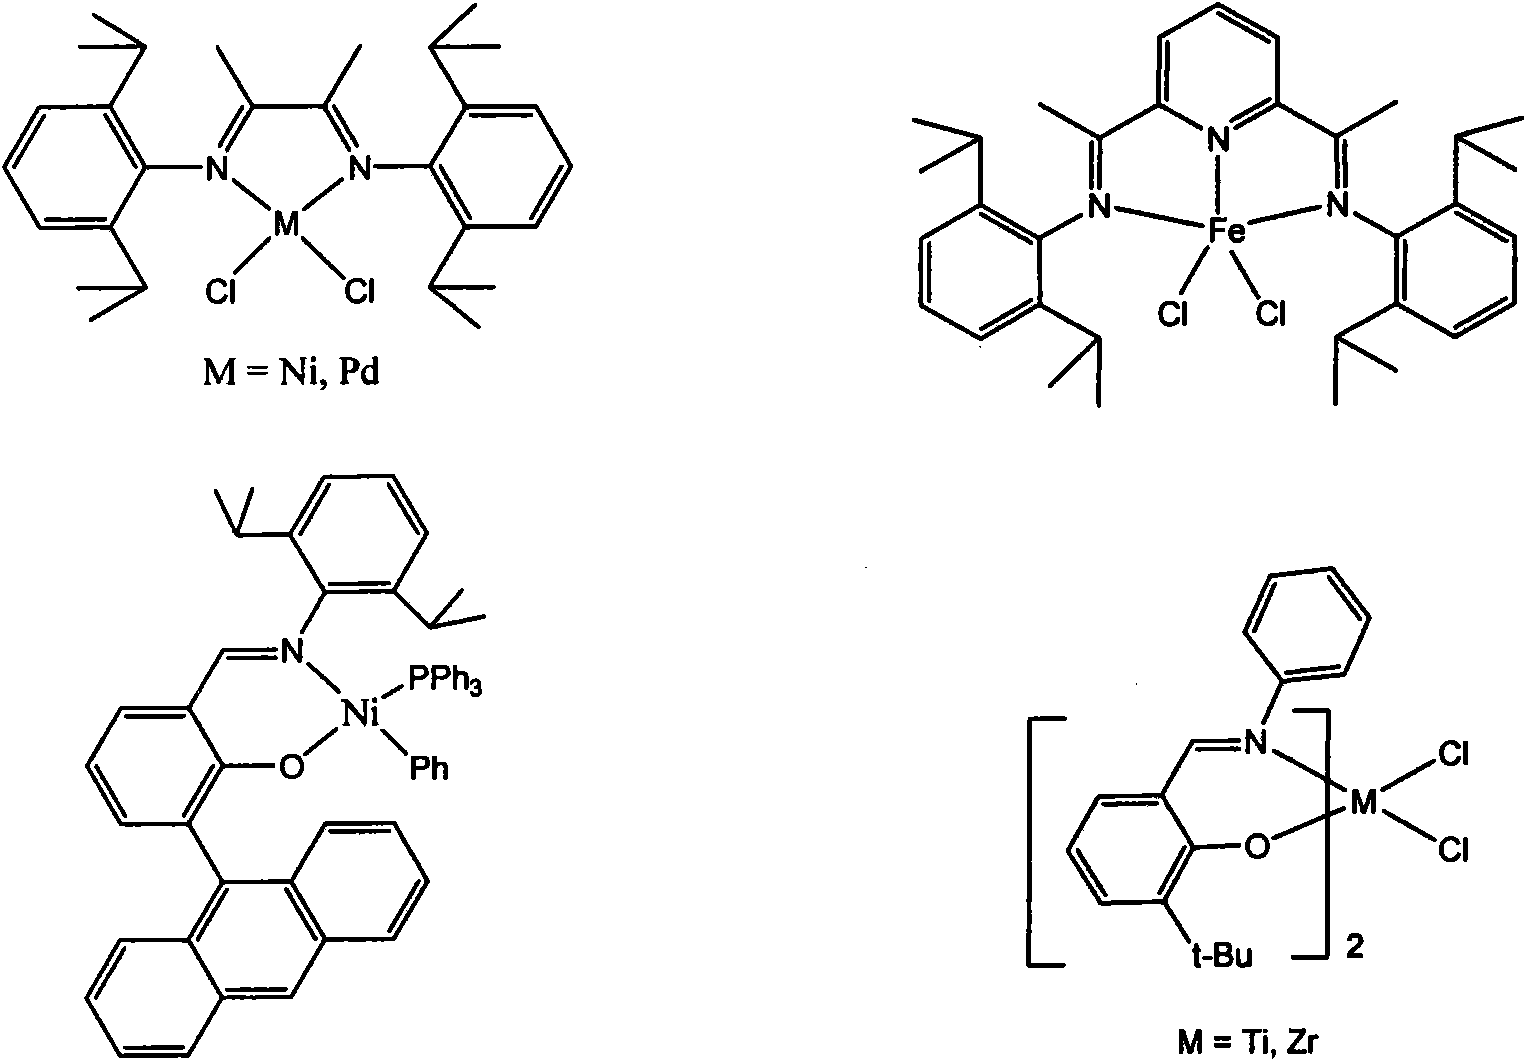 Self-assembled olefin polymerization catalyst